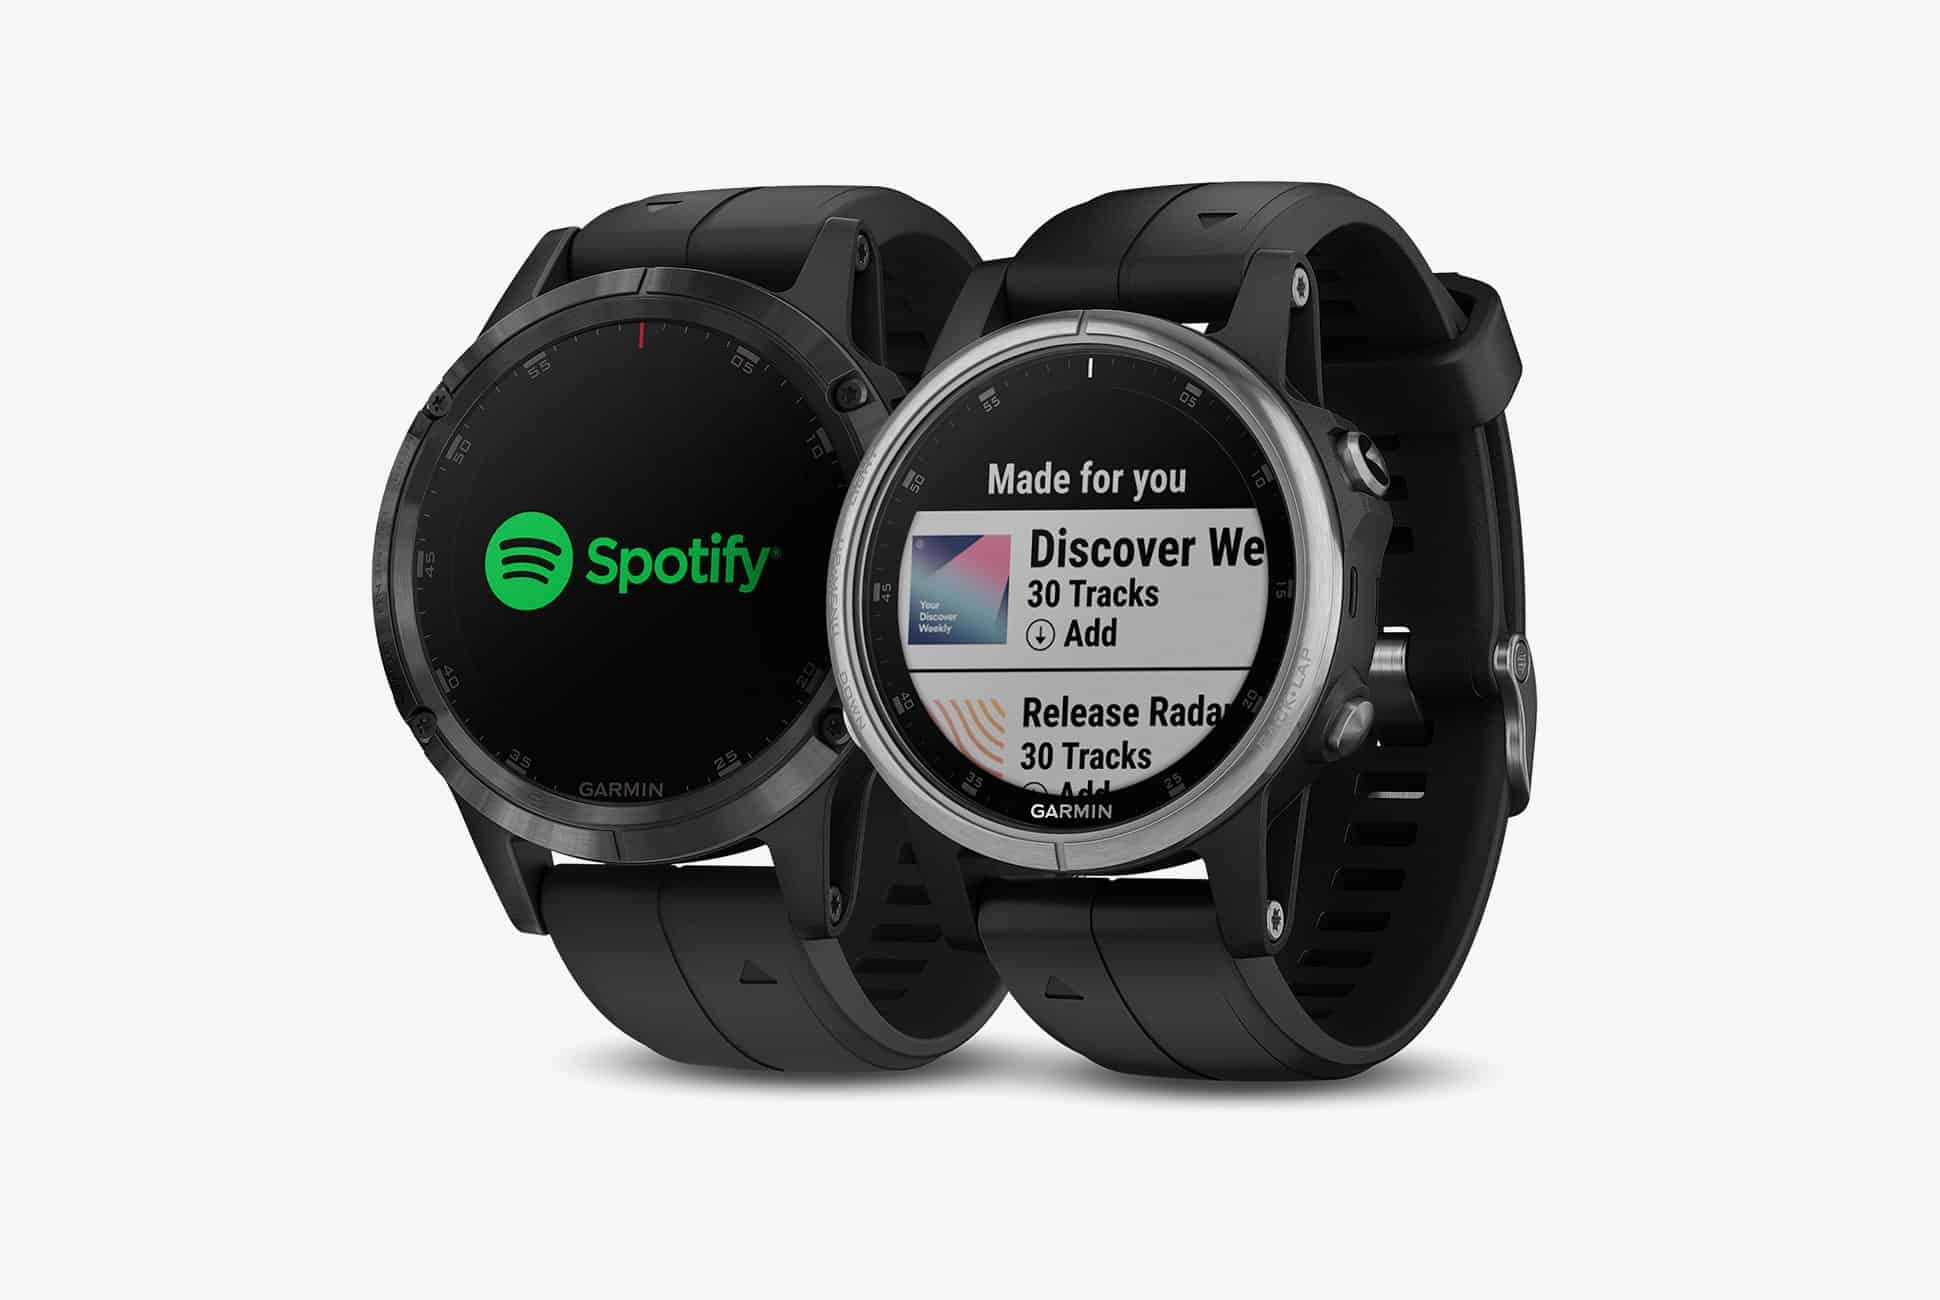 fossil smartwatch spotify offline